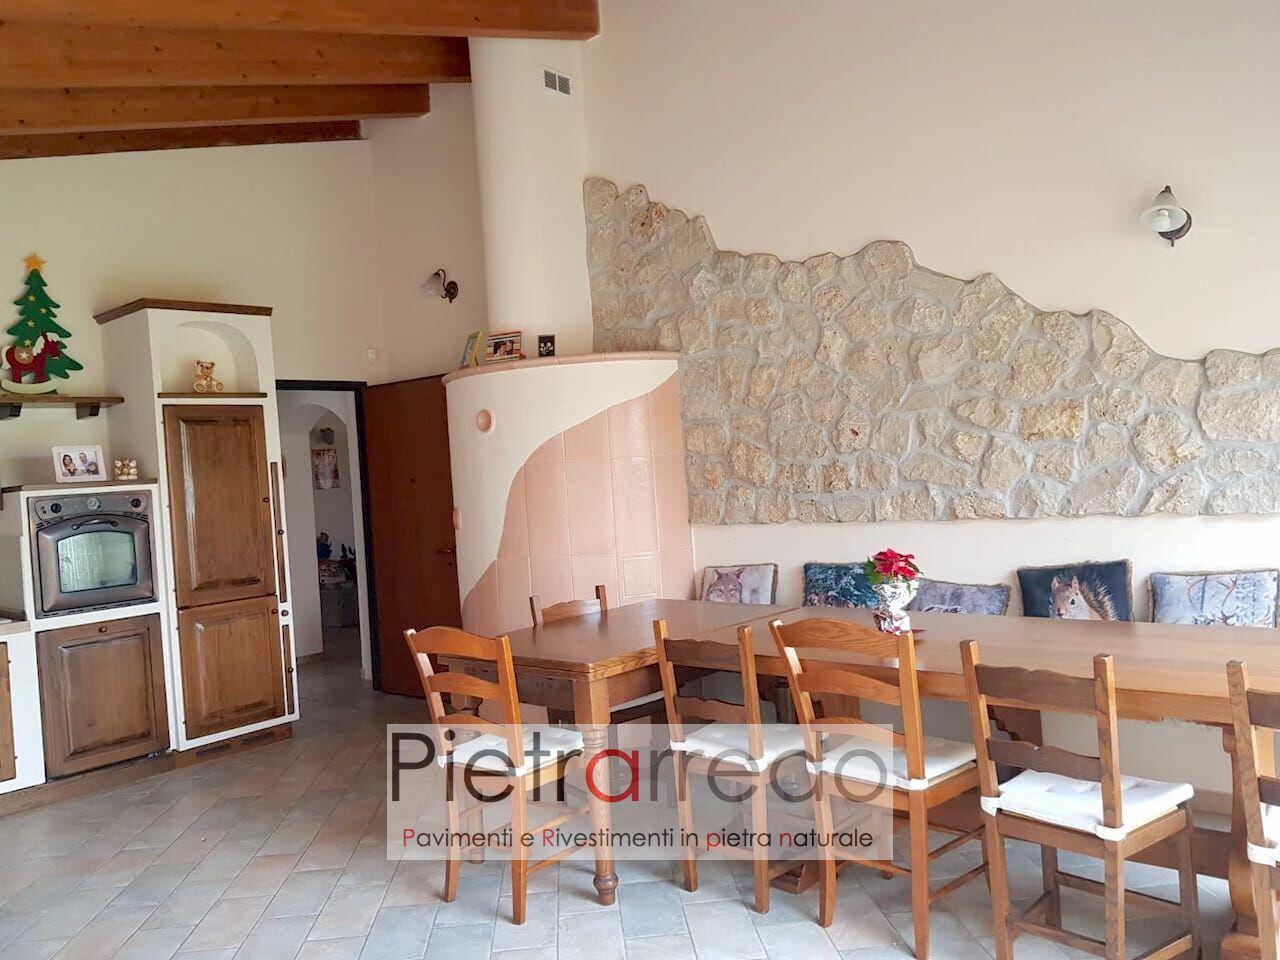 parete taverna rustica cascina rivestiento pietra naturale vera borgo toscano beige elegante prezzo pietrarredo